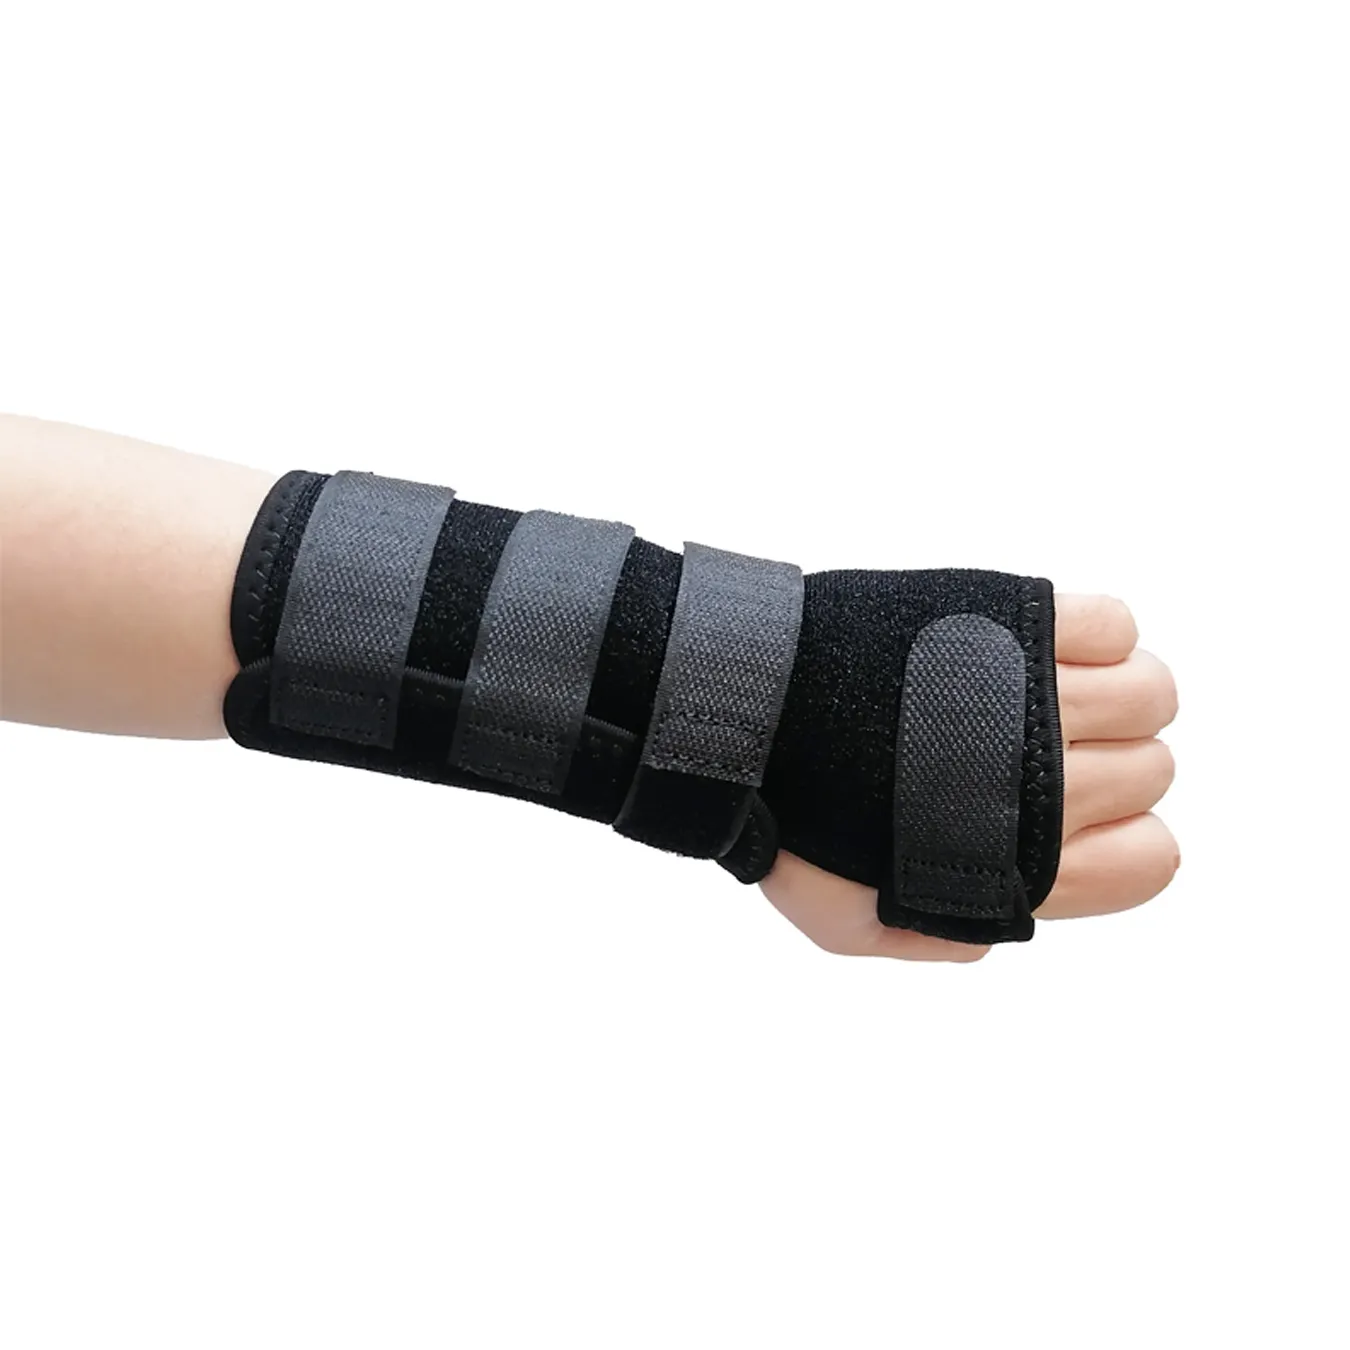 Adjustable Orthopedic Medical Neoprene Wrist Support Brace Splint  For Carpal Tunnel